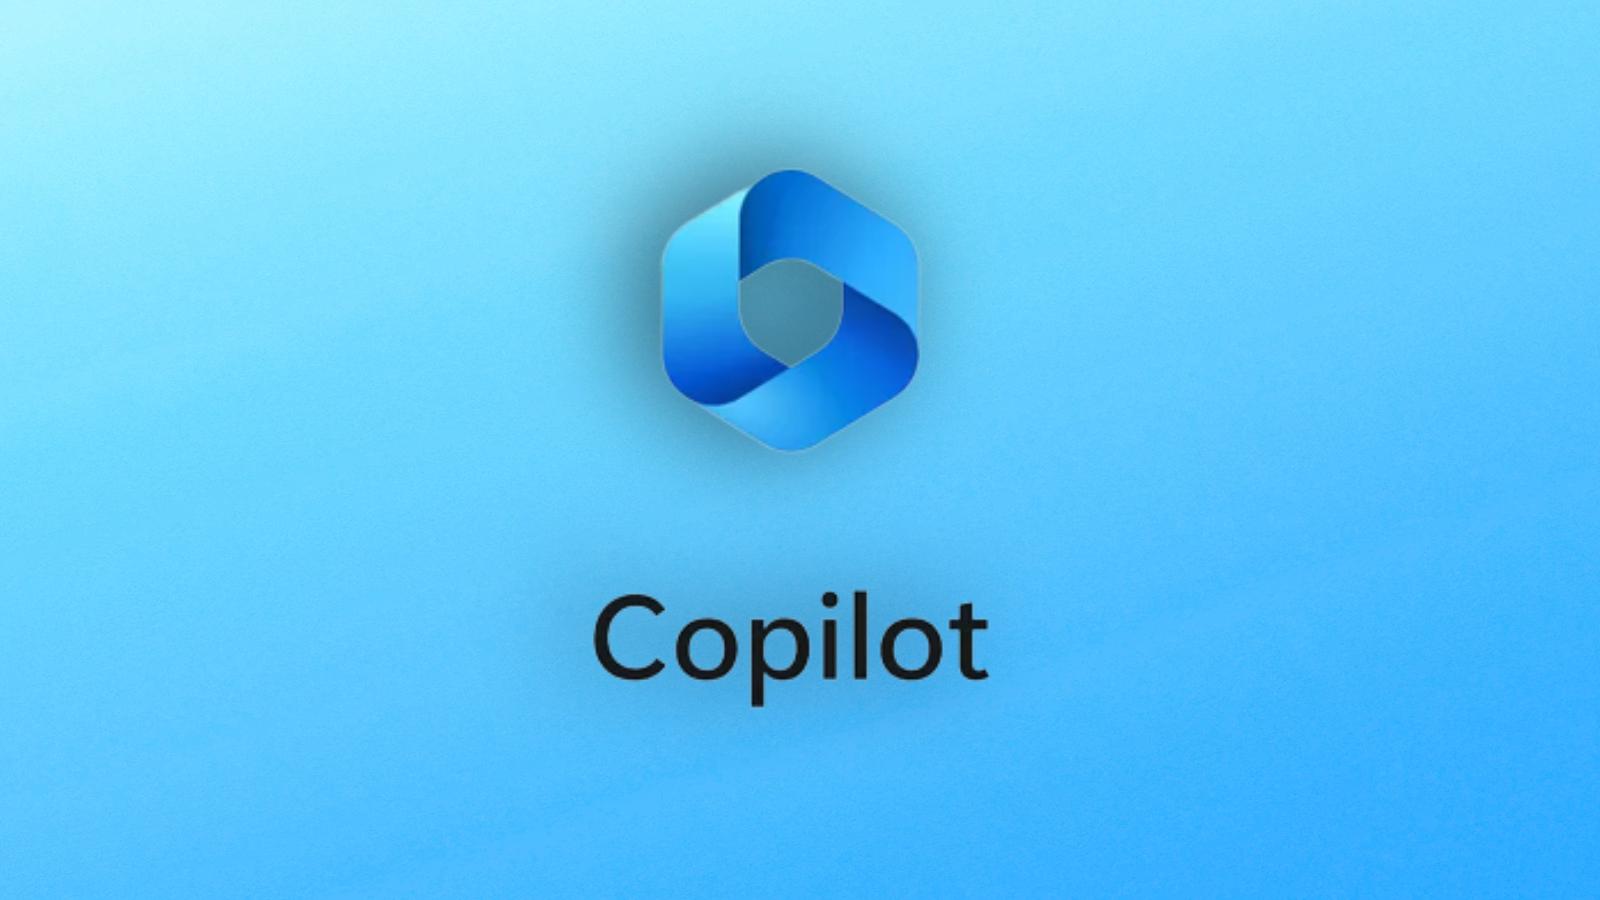 Microsoft Copilot logo on blue background